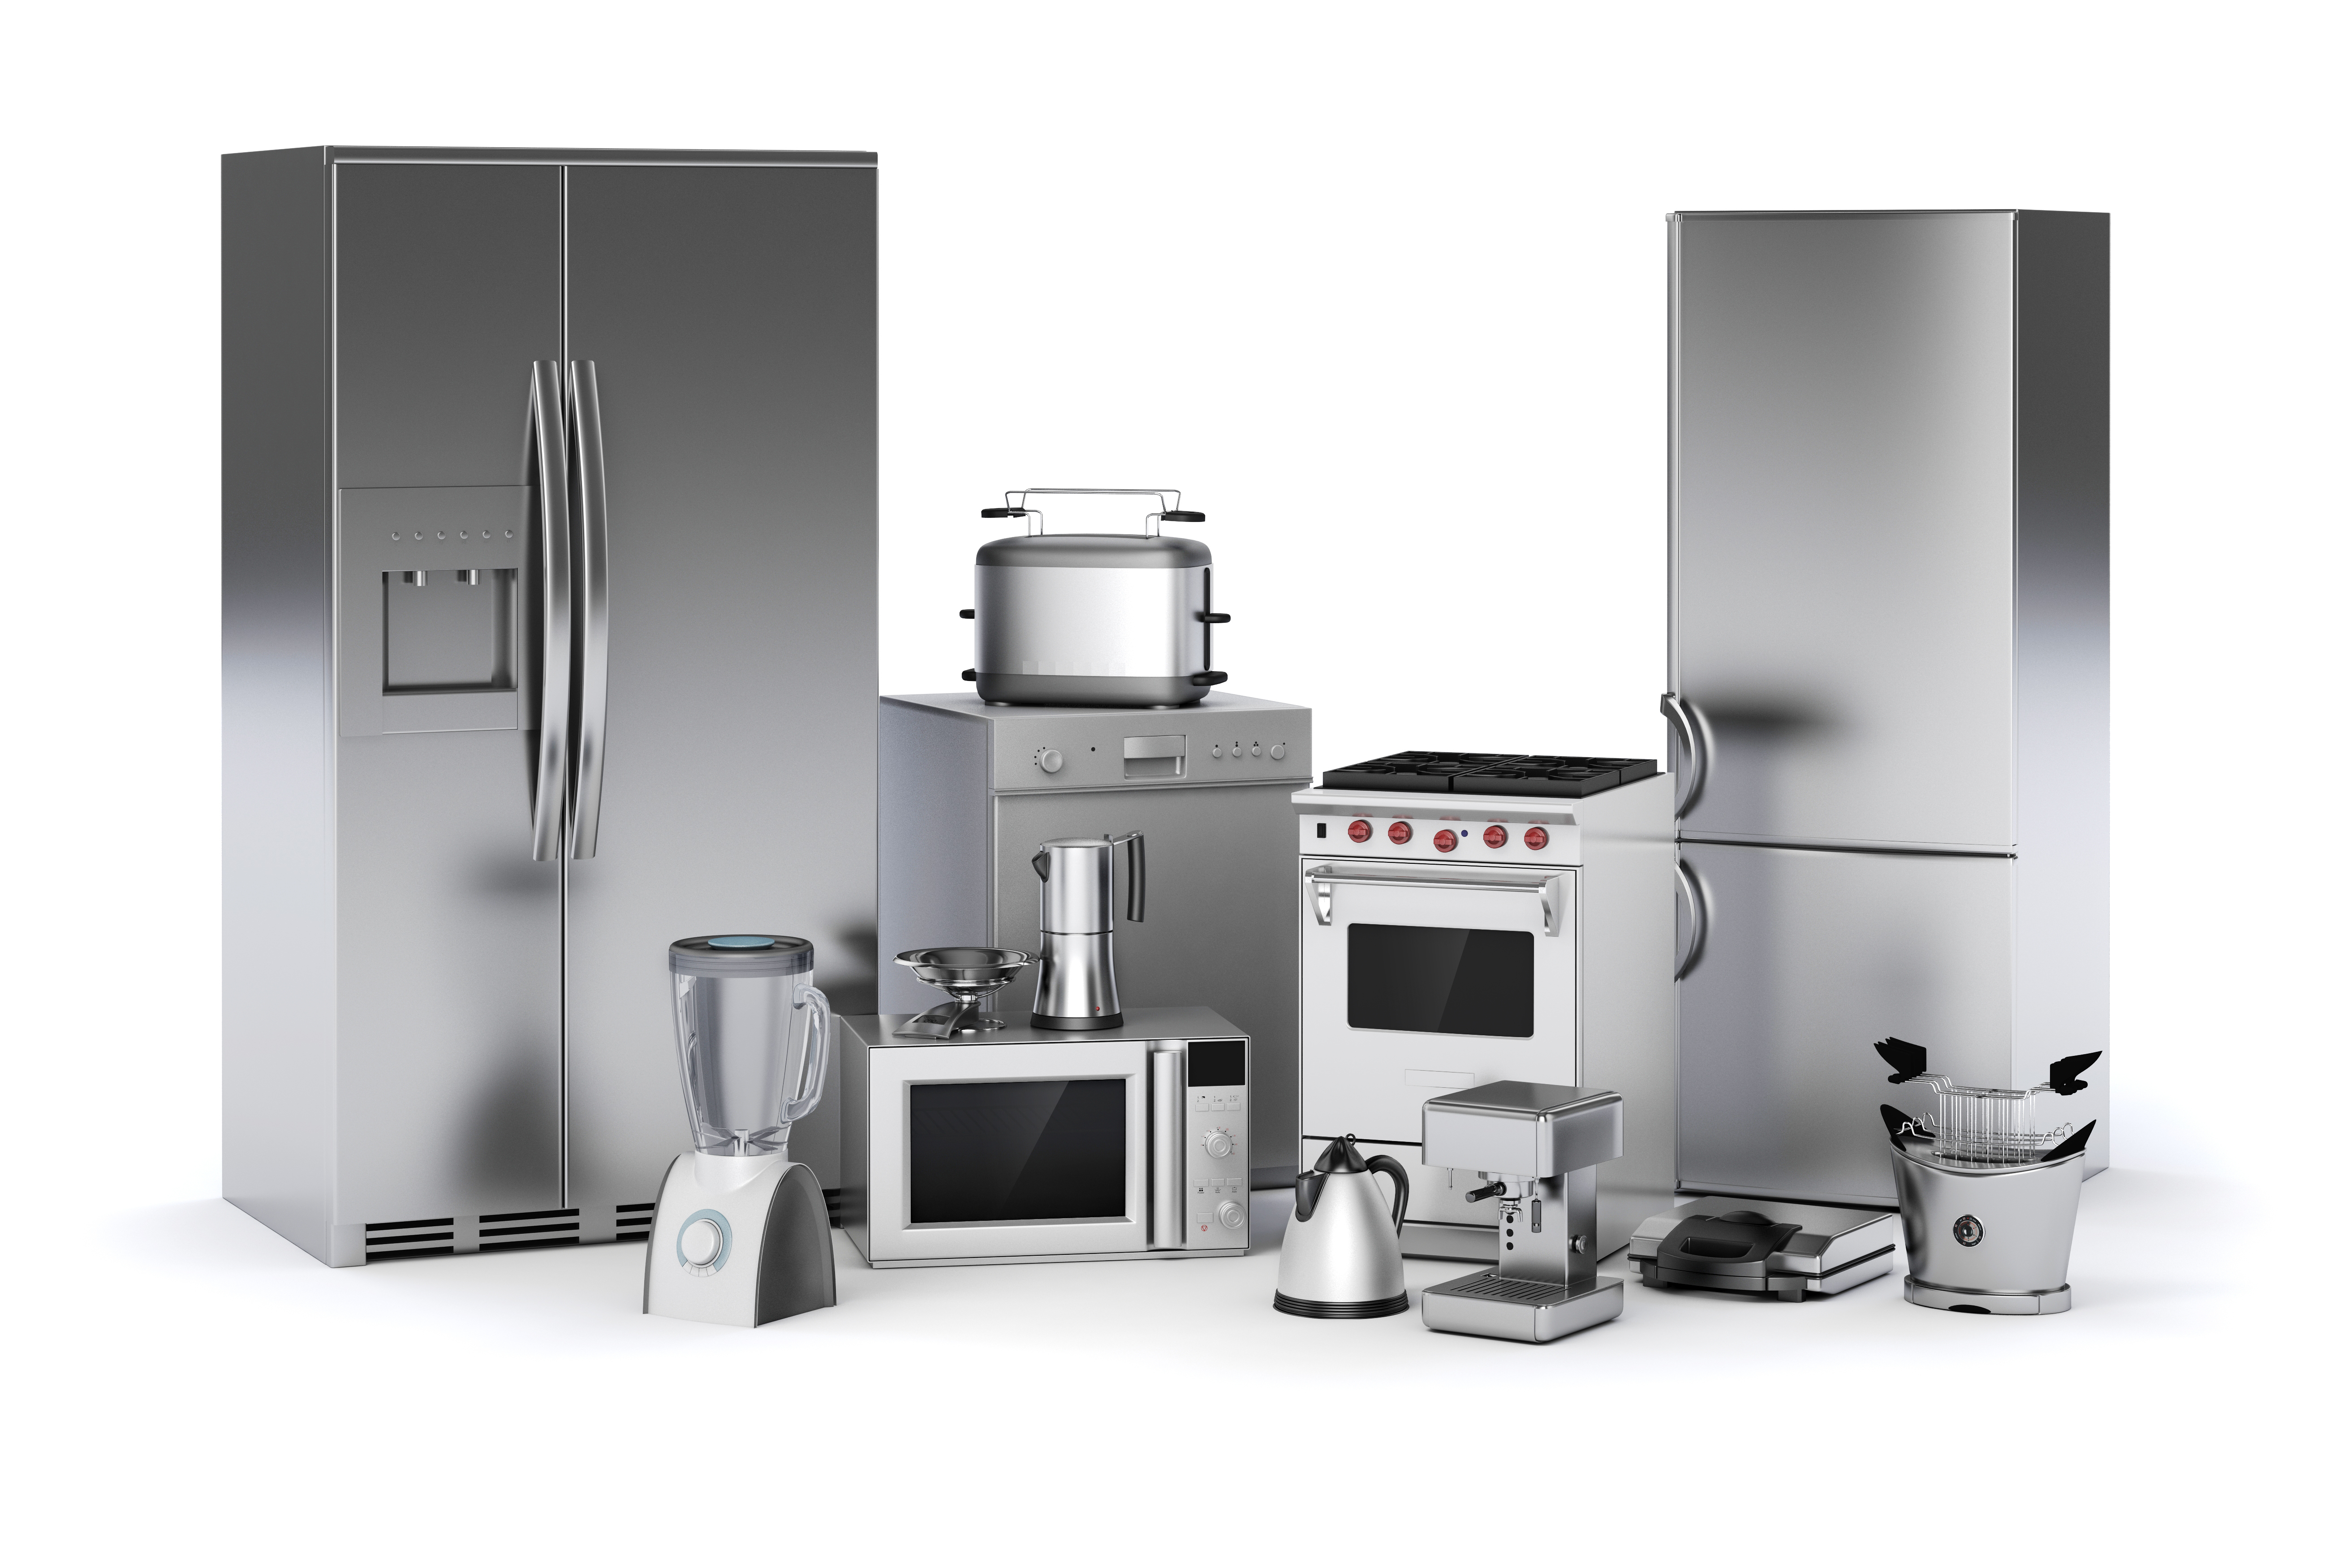 Consumer Electronics photo - ovens, blenders, refrigerators